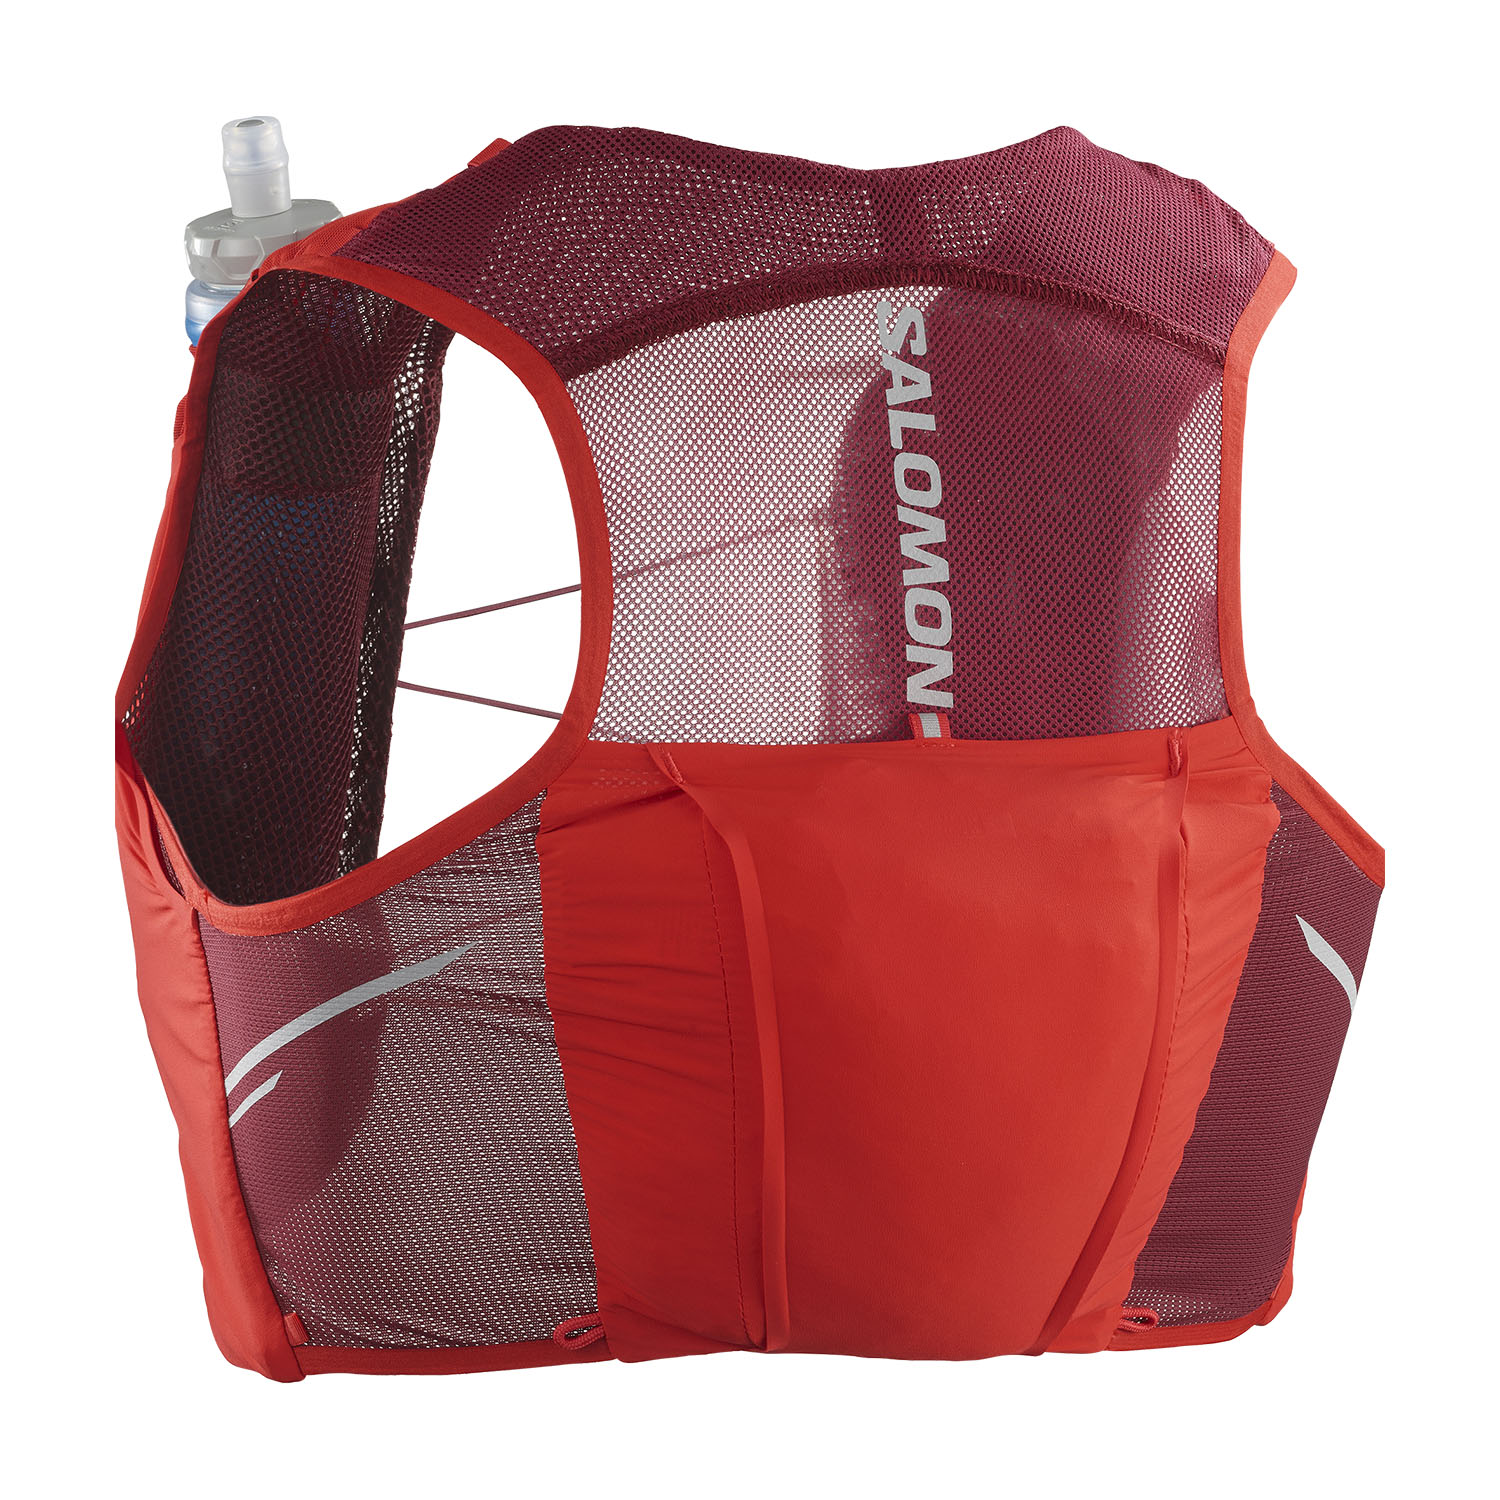 Salomon Sense Pro 2 Backpack - Fiery Red/Cabernet